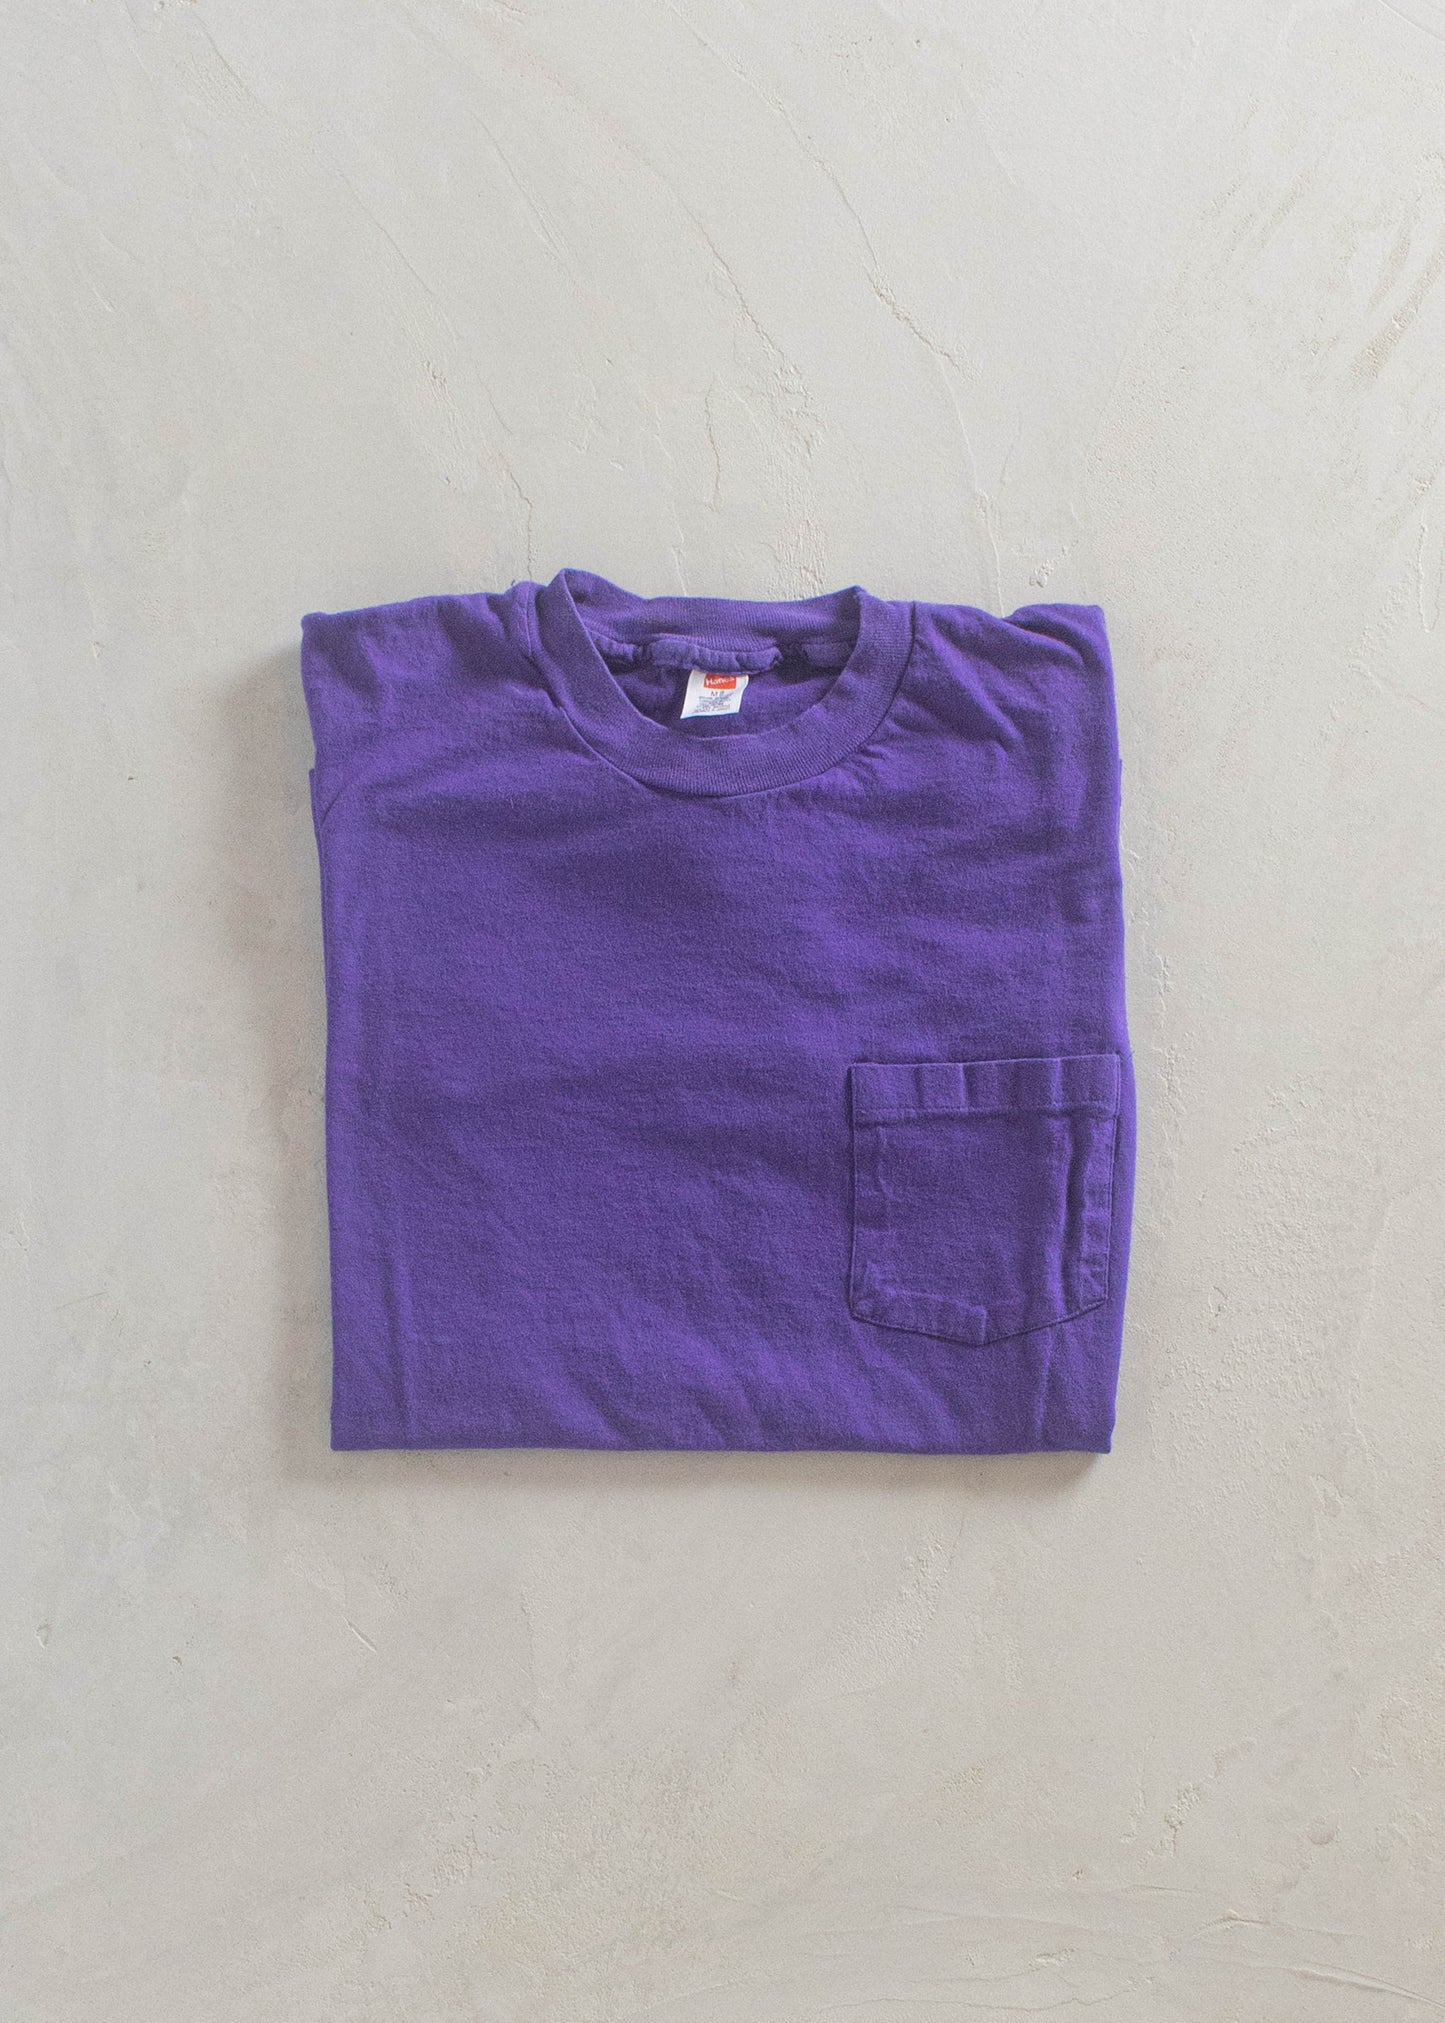 1980s Hanes Selvedge Pocket T-Shirt Size S/M